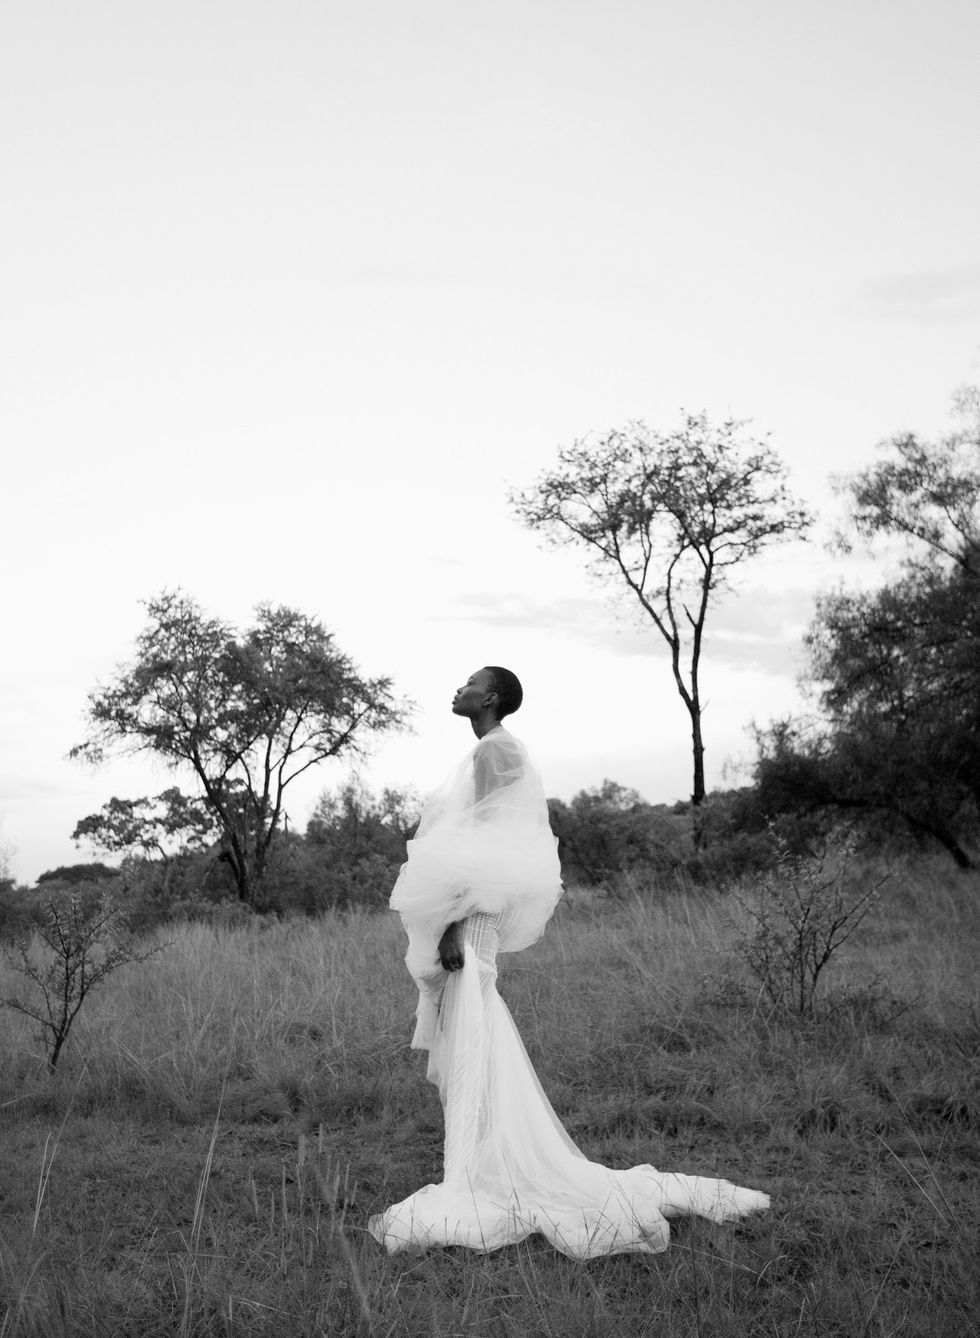 Photograph, White, Bride, Dress, Gown, Sky, Wedding dress, Photography, Monochrome photography, Black-and-white, 